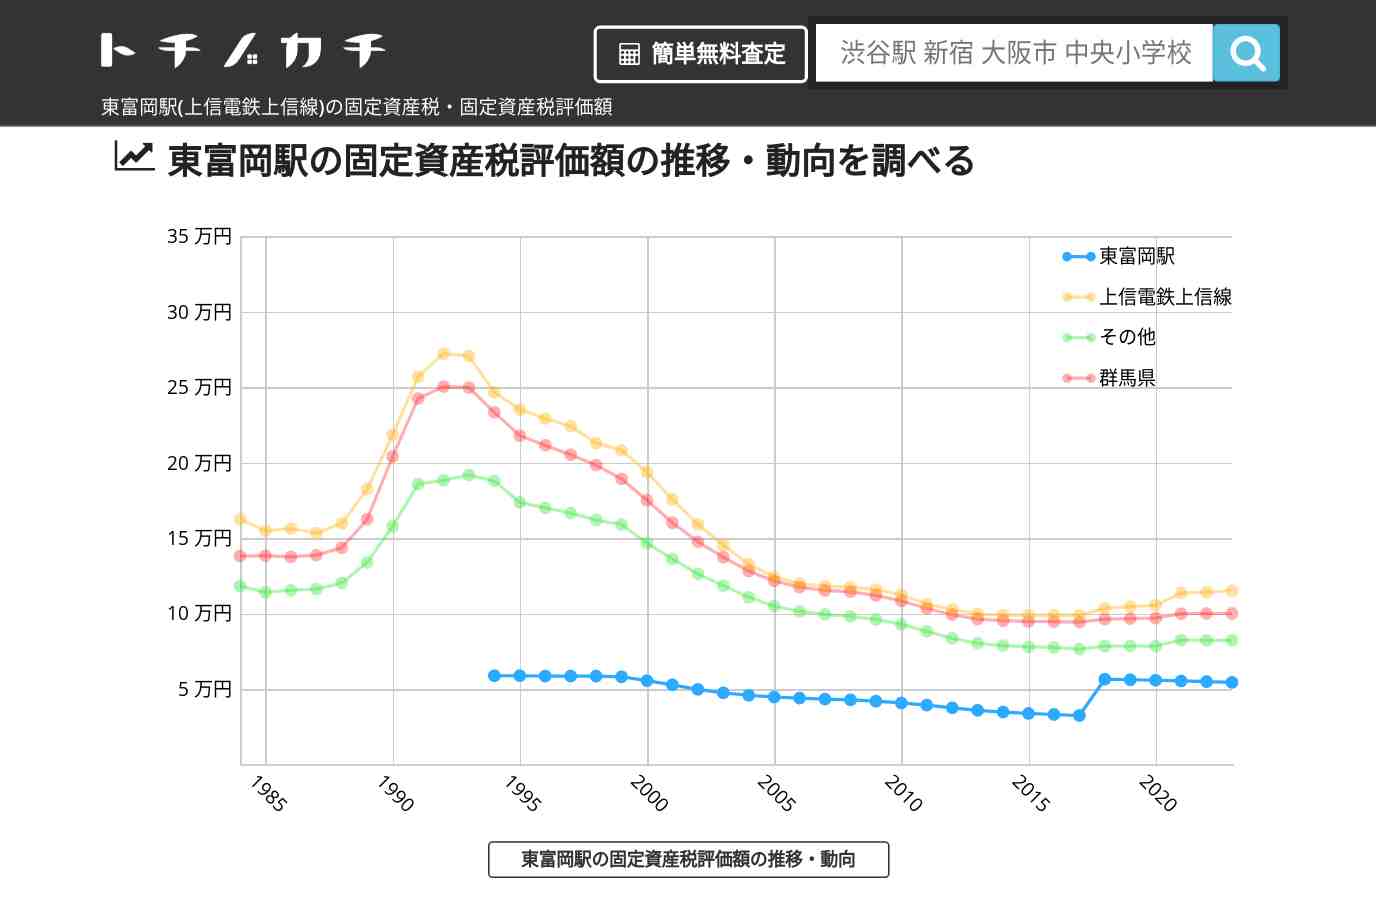 東富岡駅(上信電鉄上信線)の固定資産税・固定資産税評価額 | トチノカチ